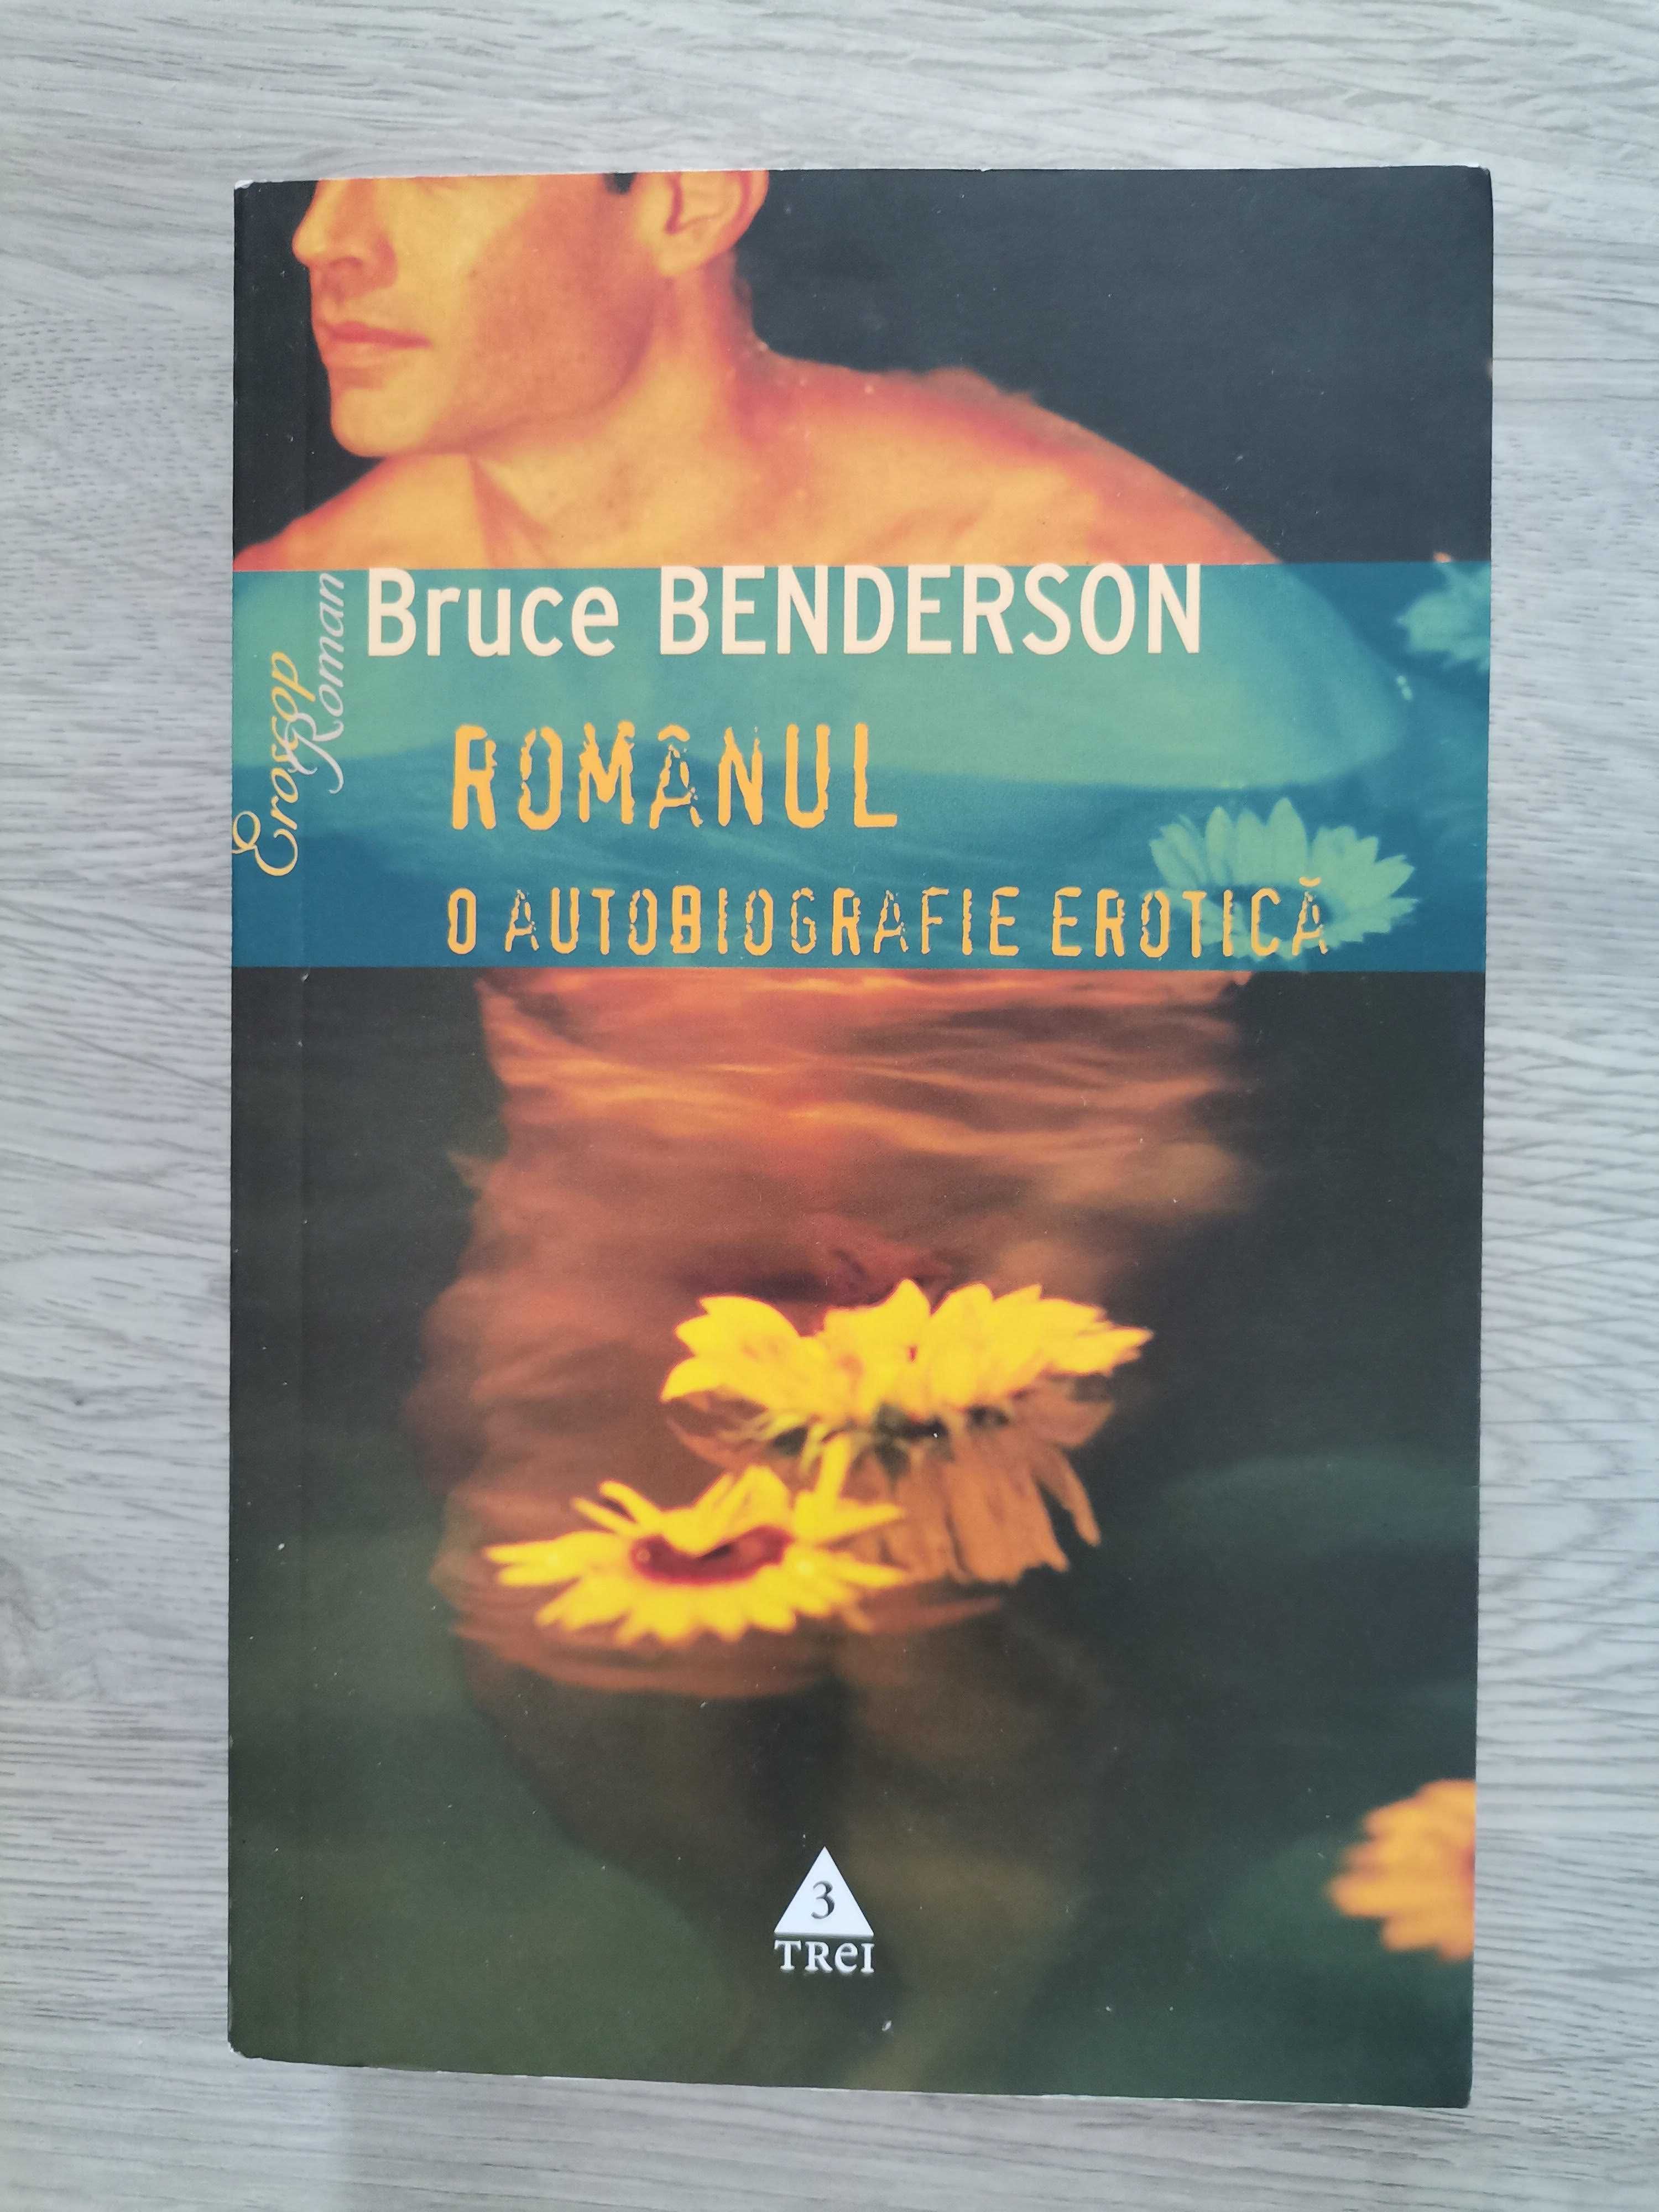 Bruce Benderson - Romanul. O autobiografie erotica